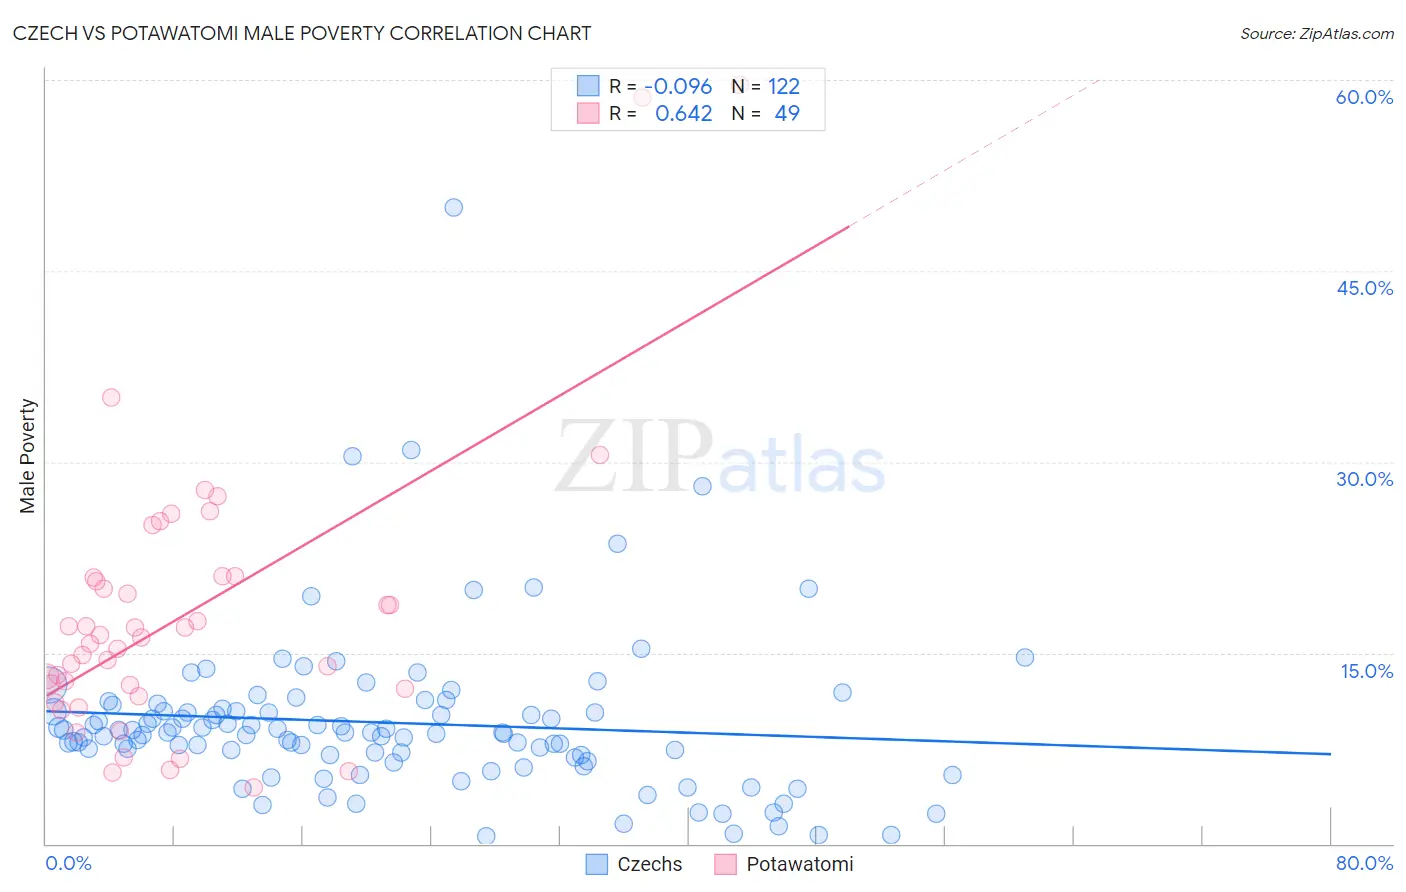 Czech vs Potawatomi Male Poverty